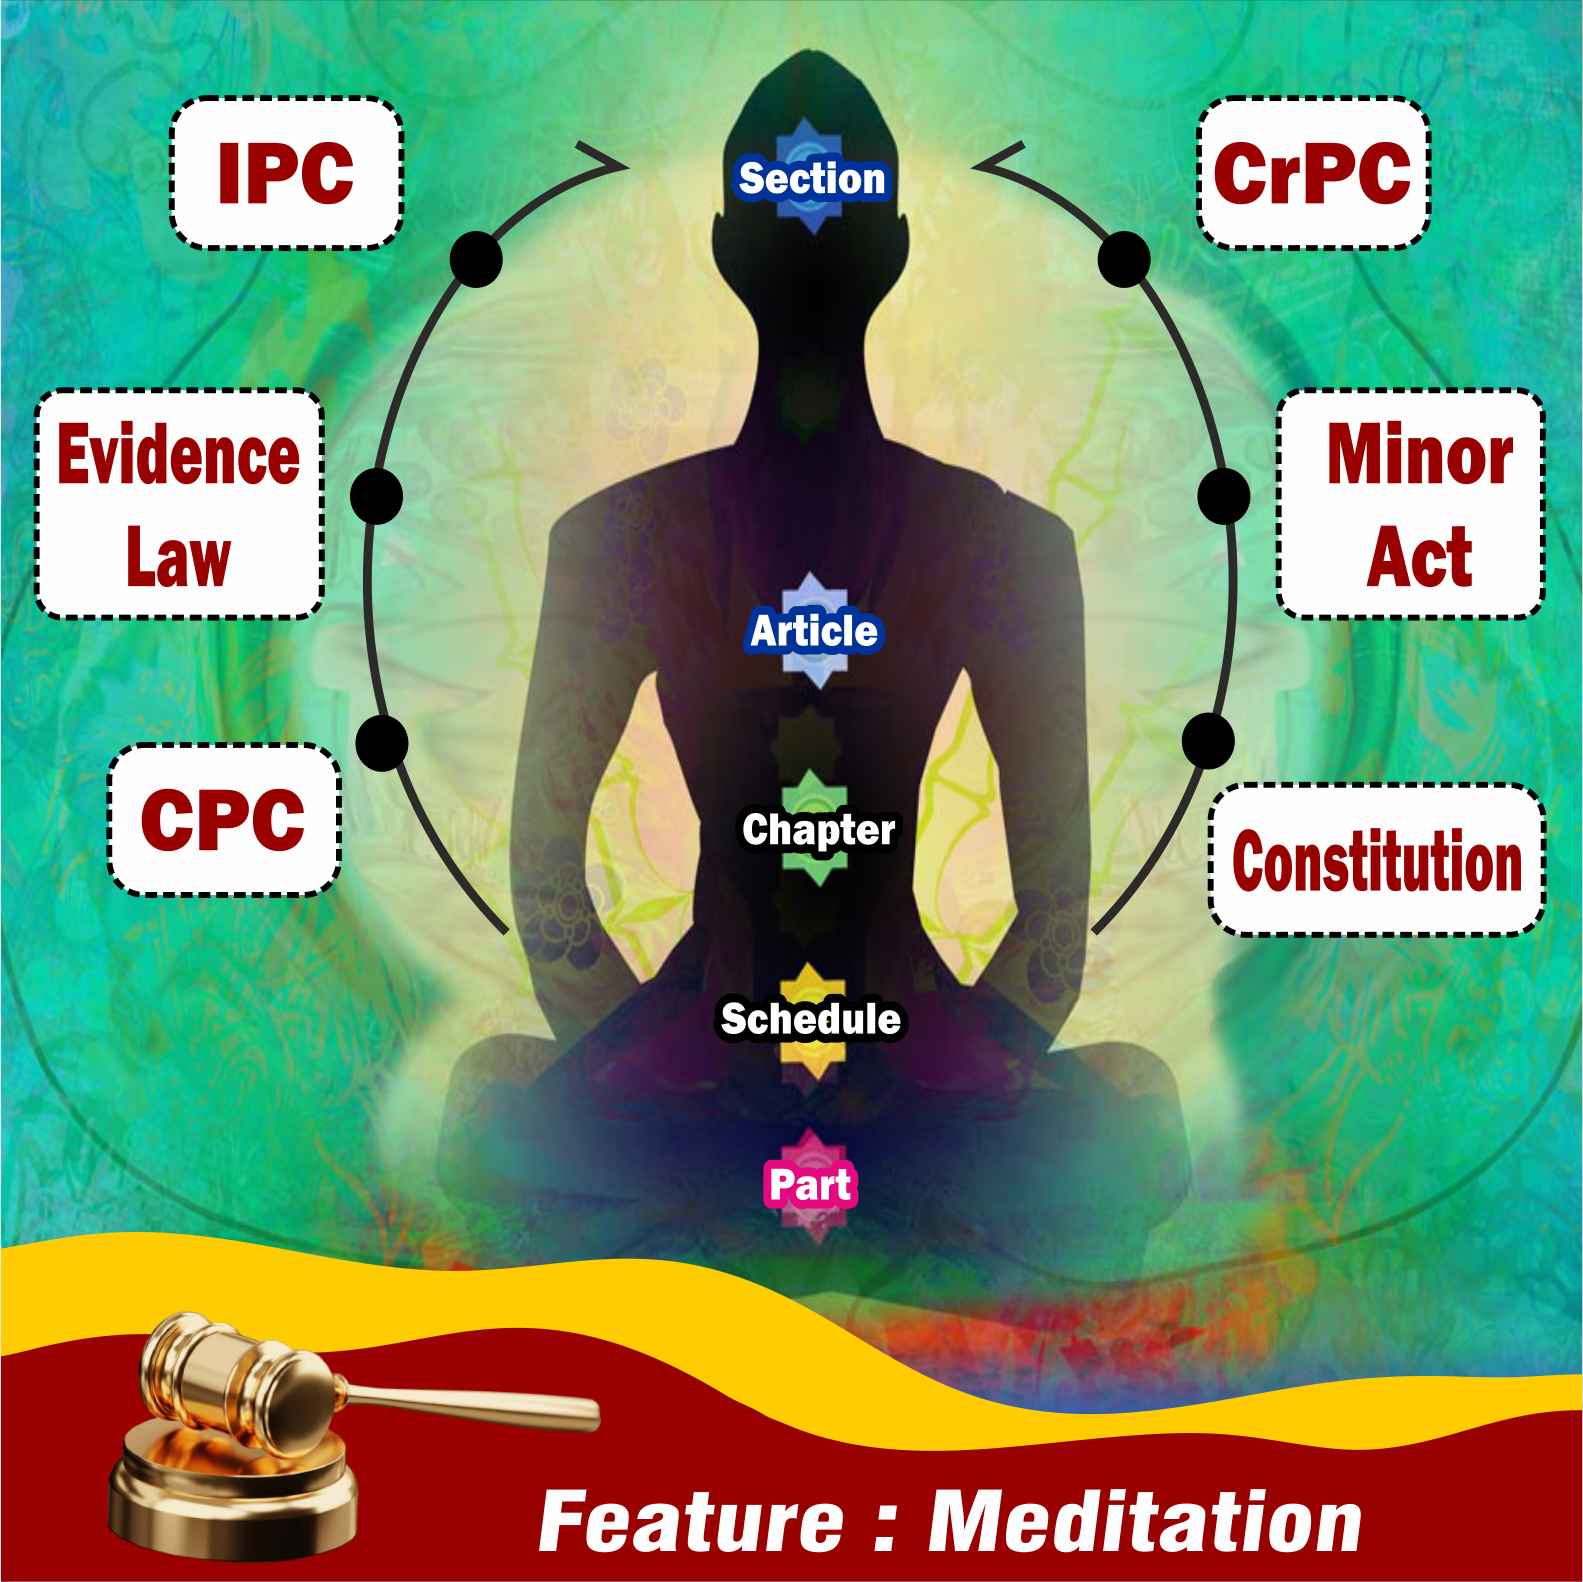 Meditation style of memorizing provisions 